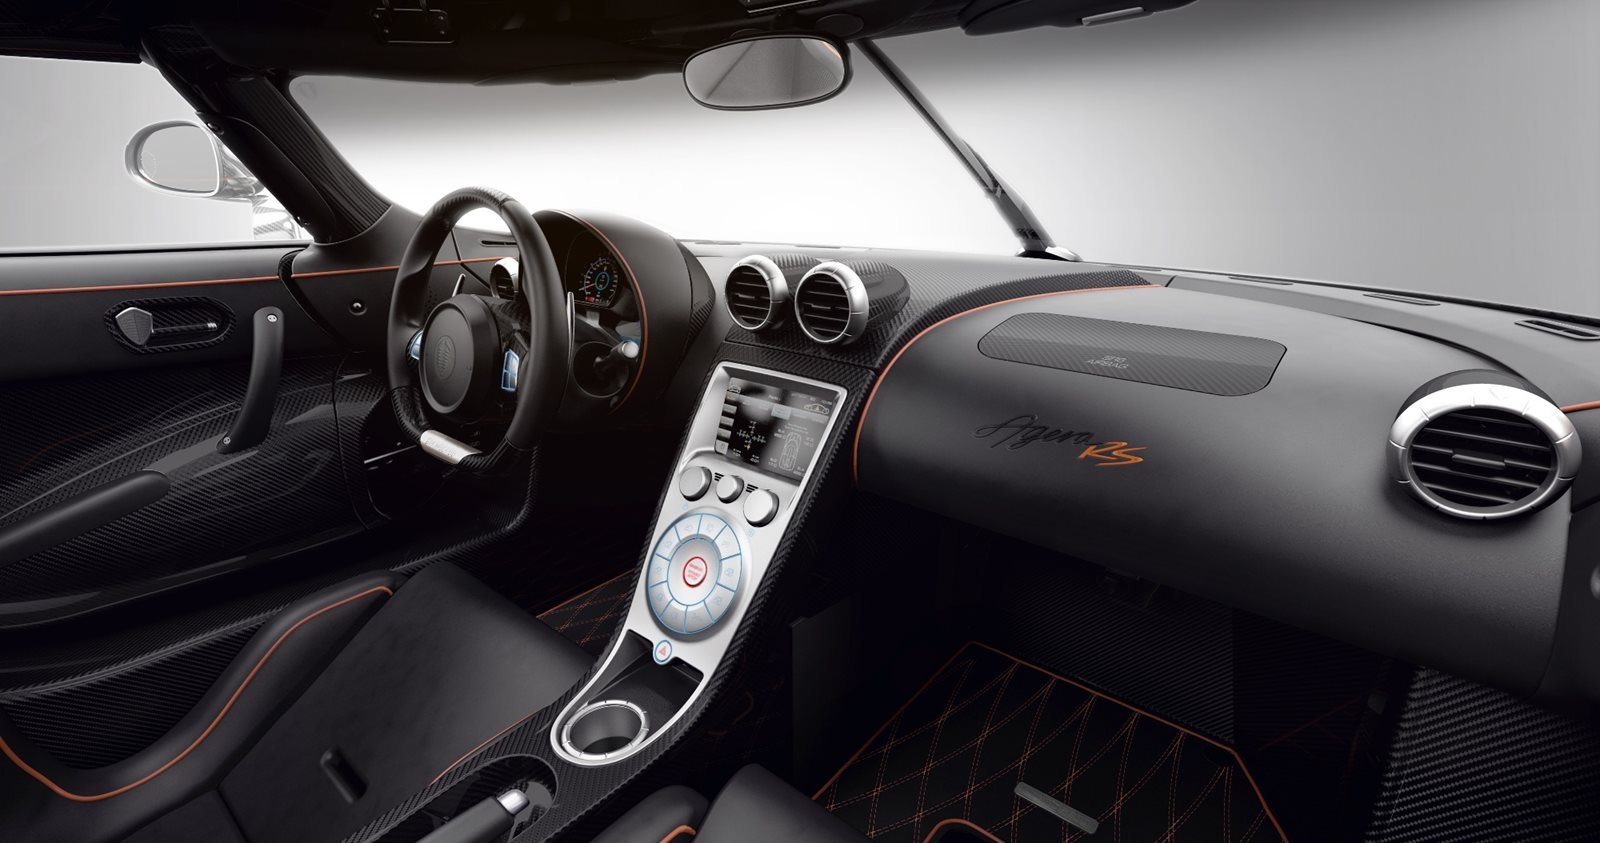 Koenigsegg Agera interior - Cockpit